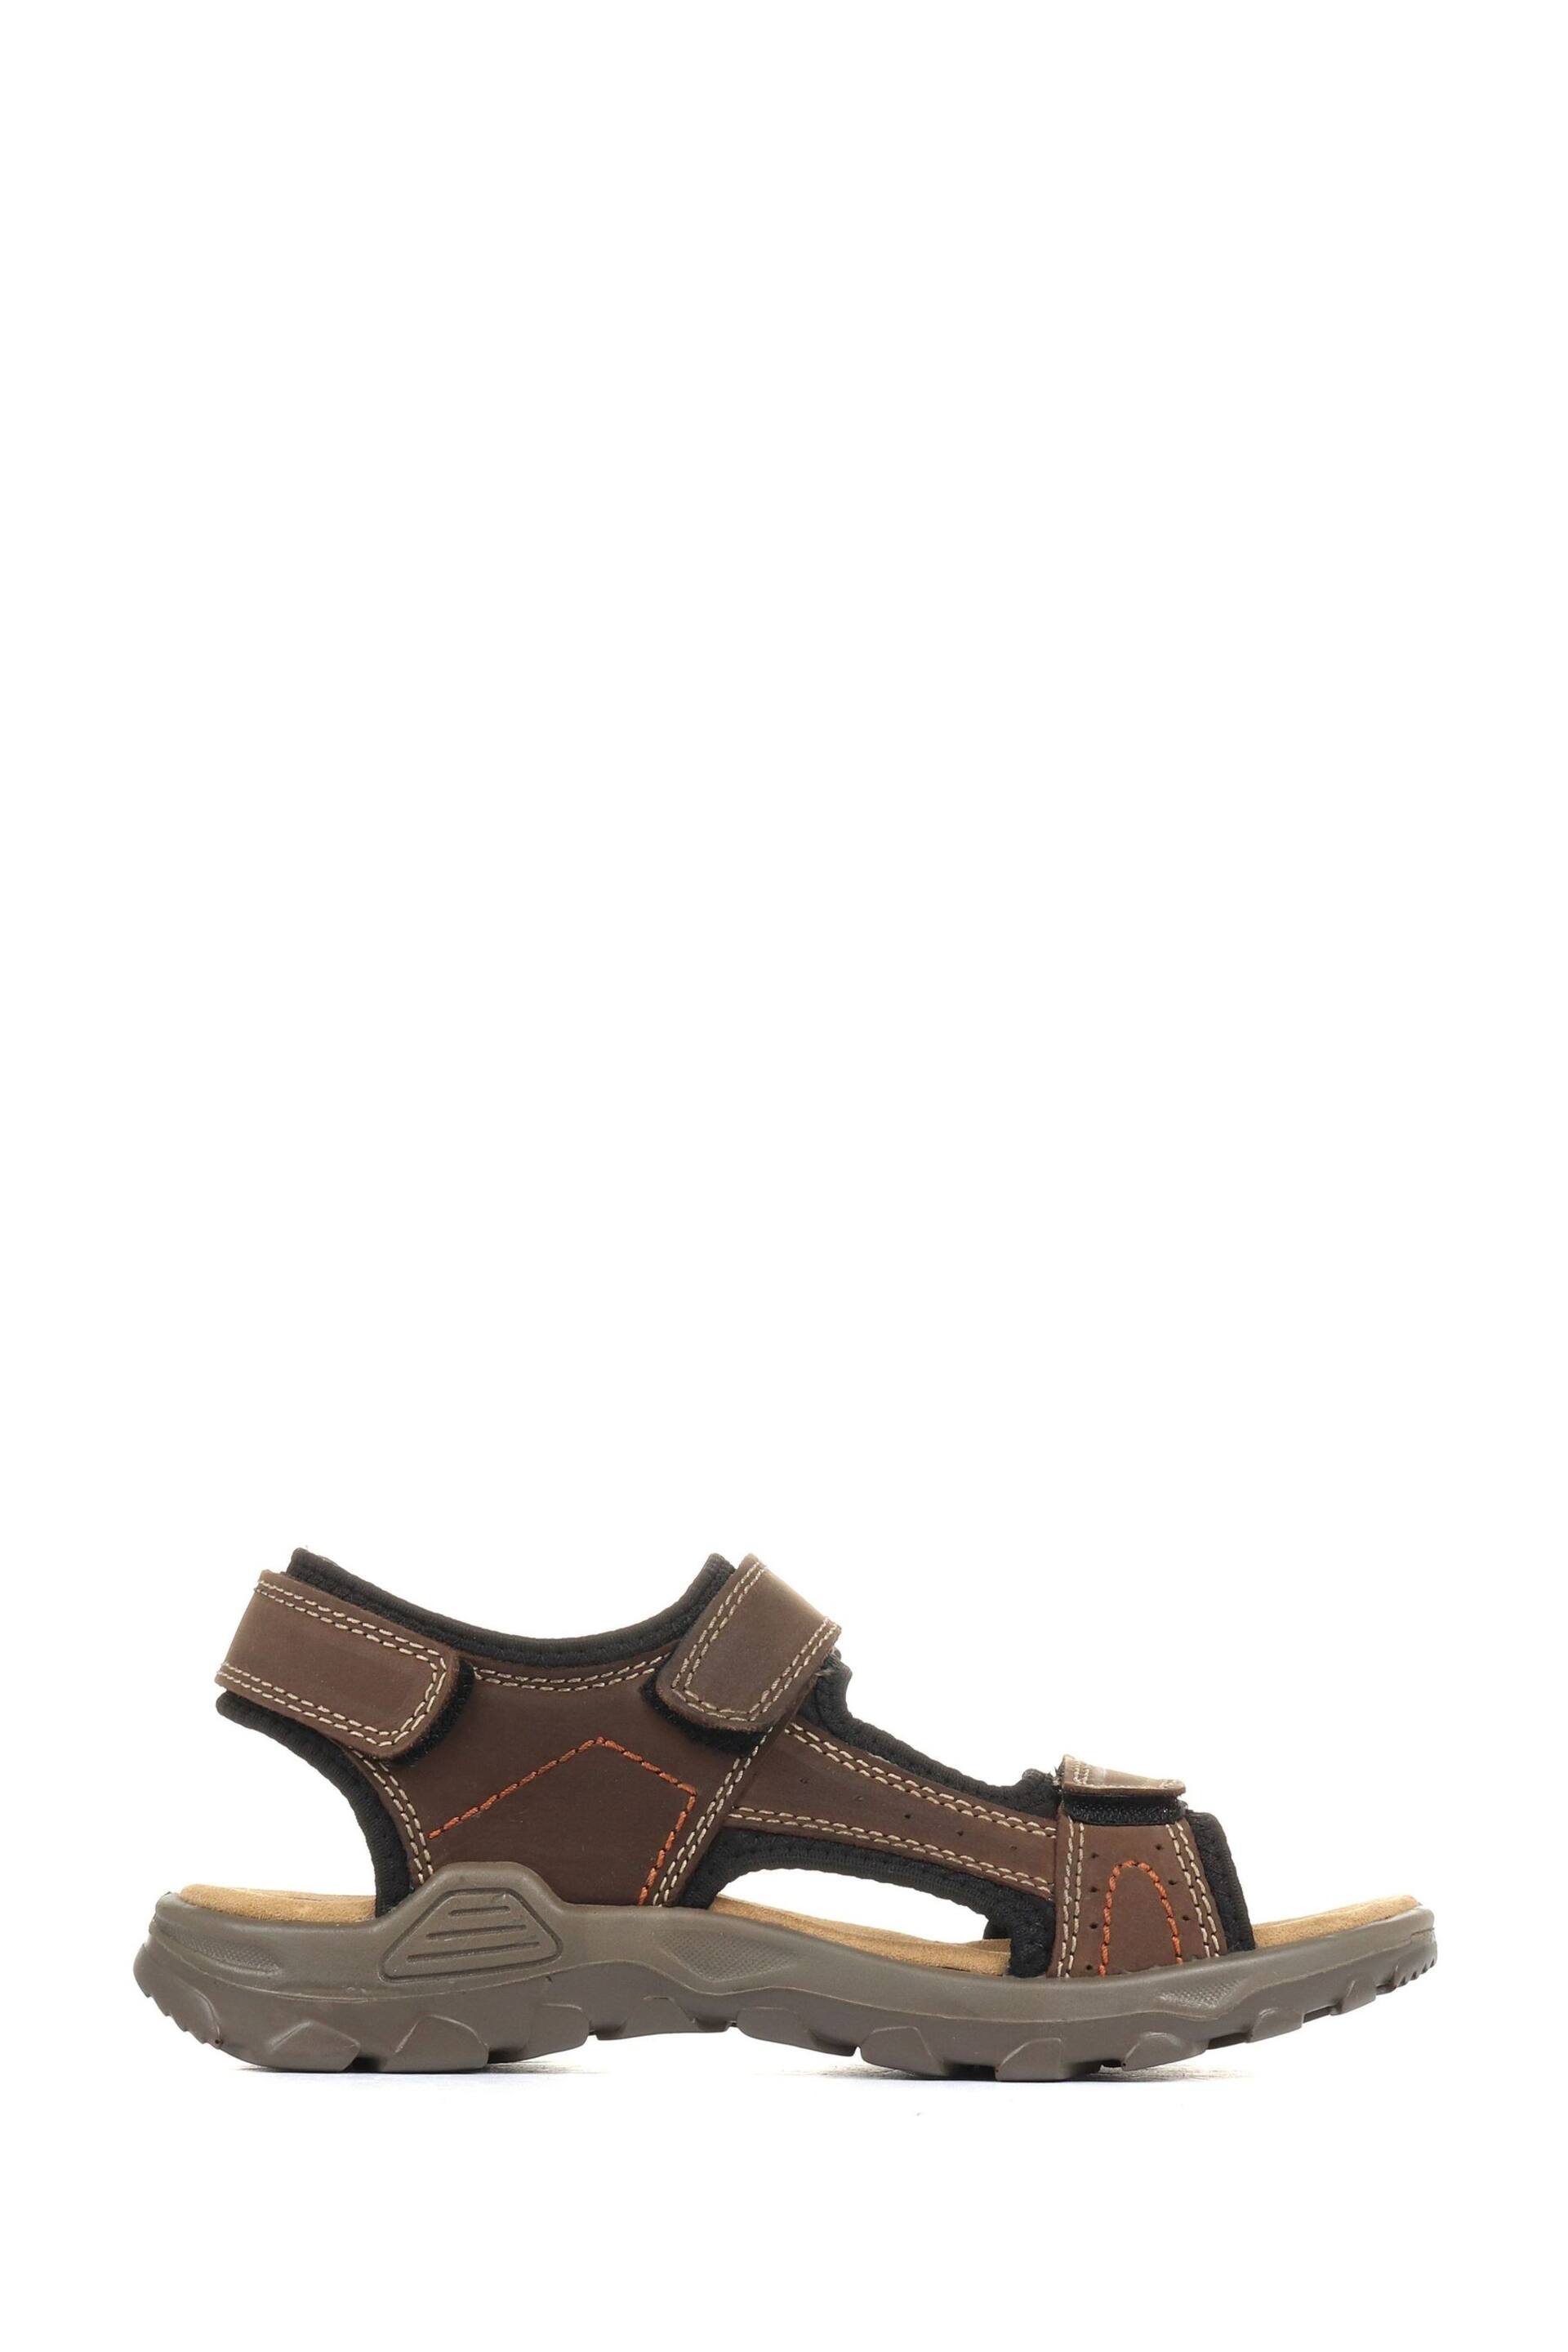 Pavers Adjustable Leather Walking Sandals - Image 1 of 5